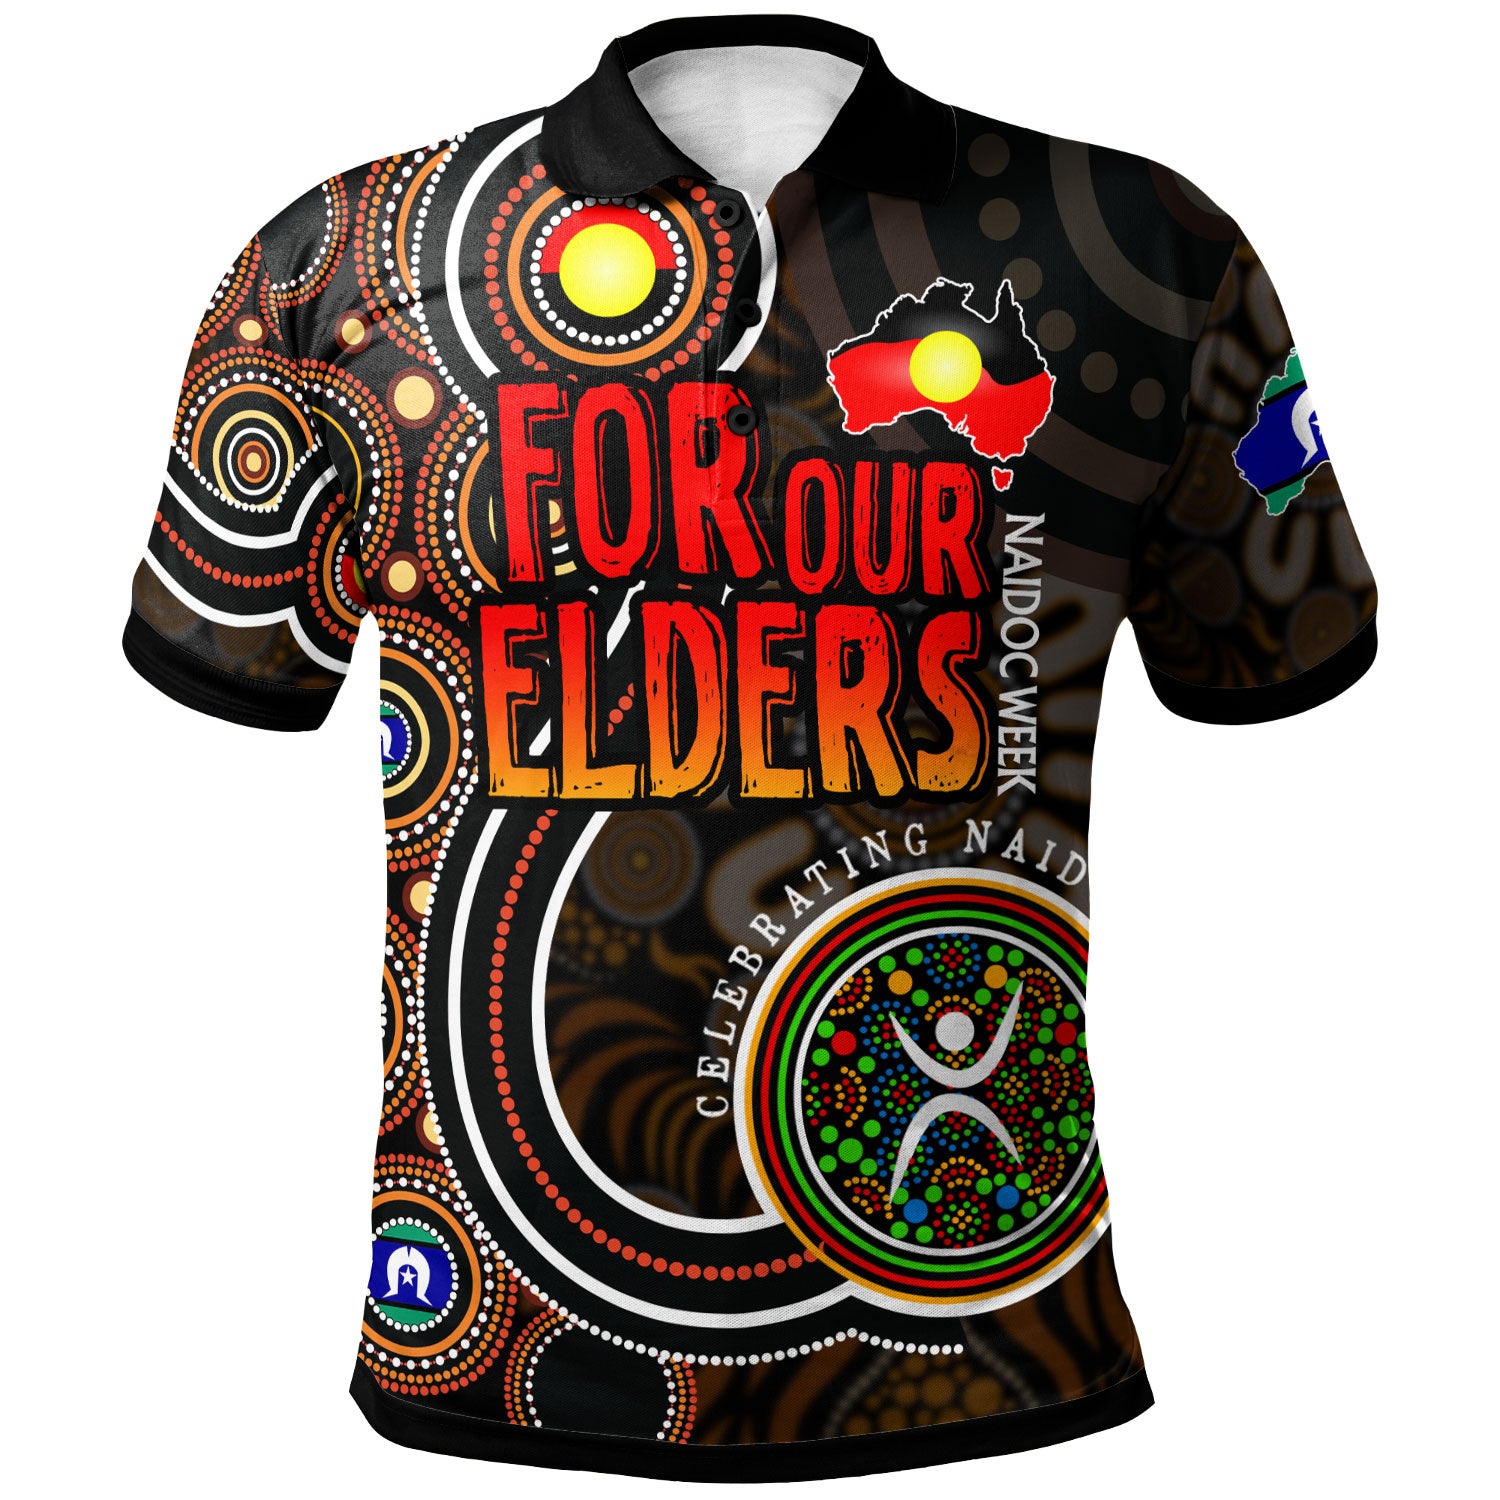 naidoc-week-2023-polo-shirt-custom-for-our-elders-aboriginal-inspired-dot-art-polo-shirt